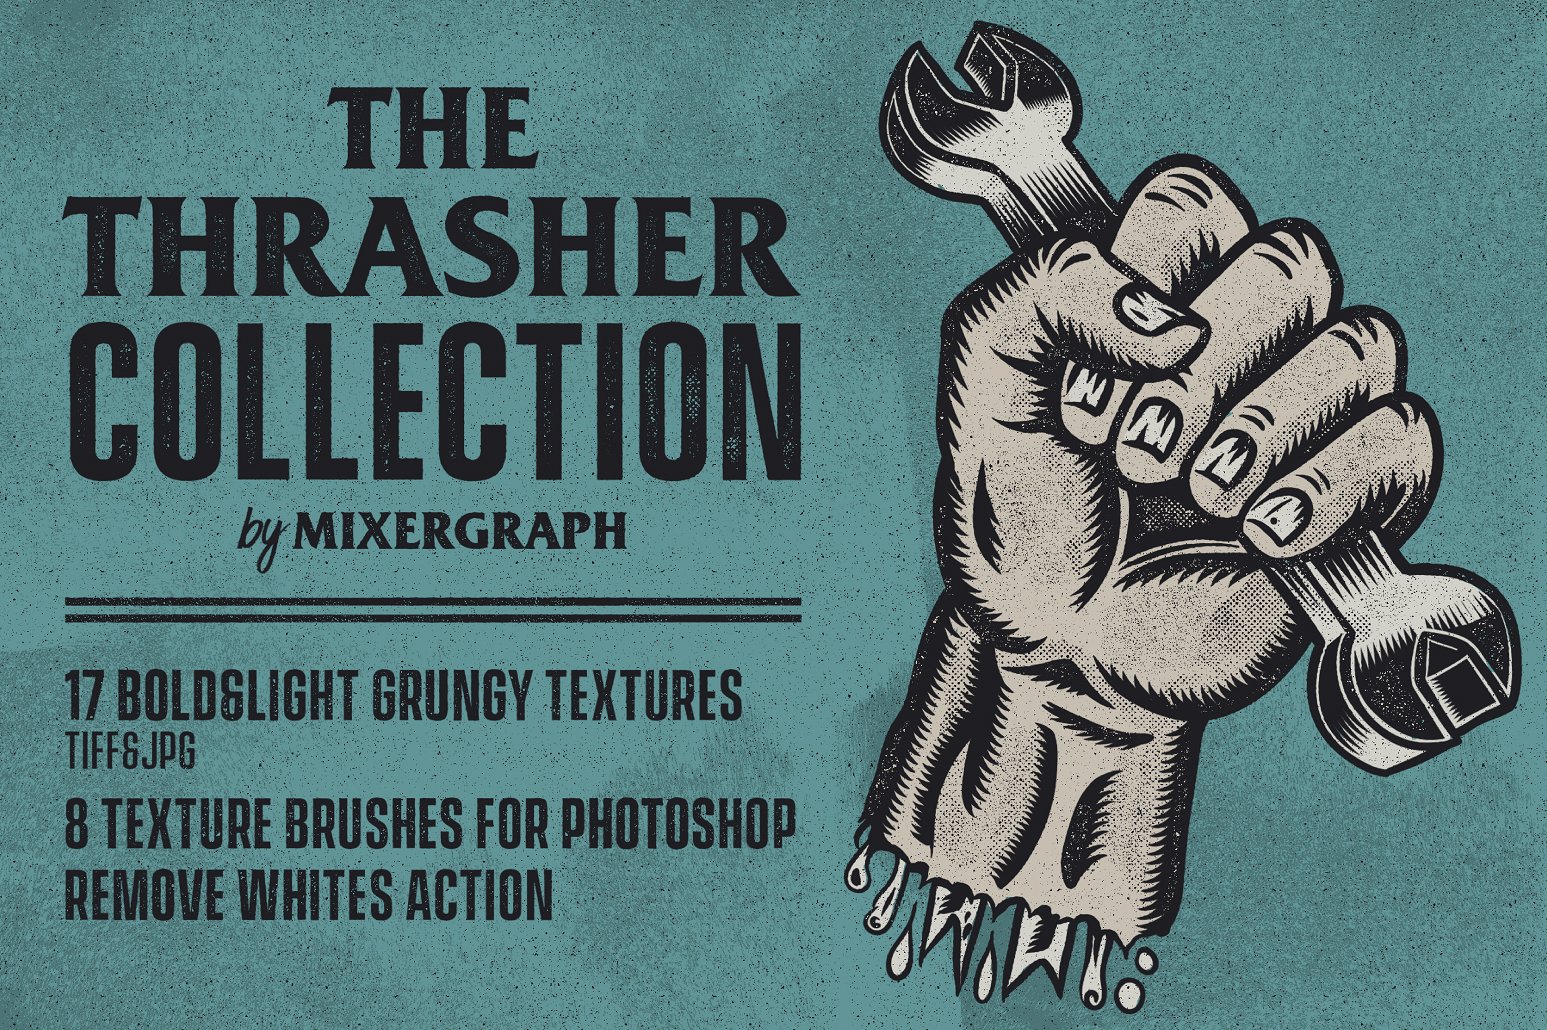 复古纹理设计素材The Thrasher Collectio